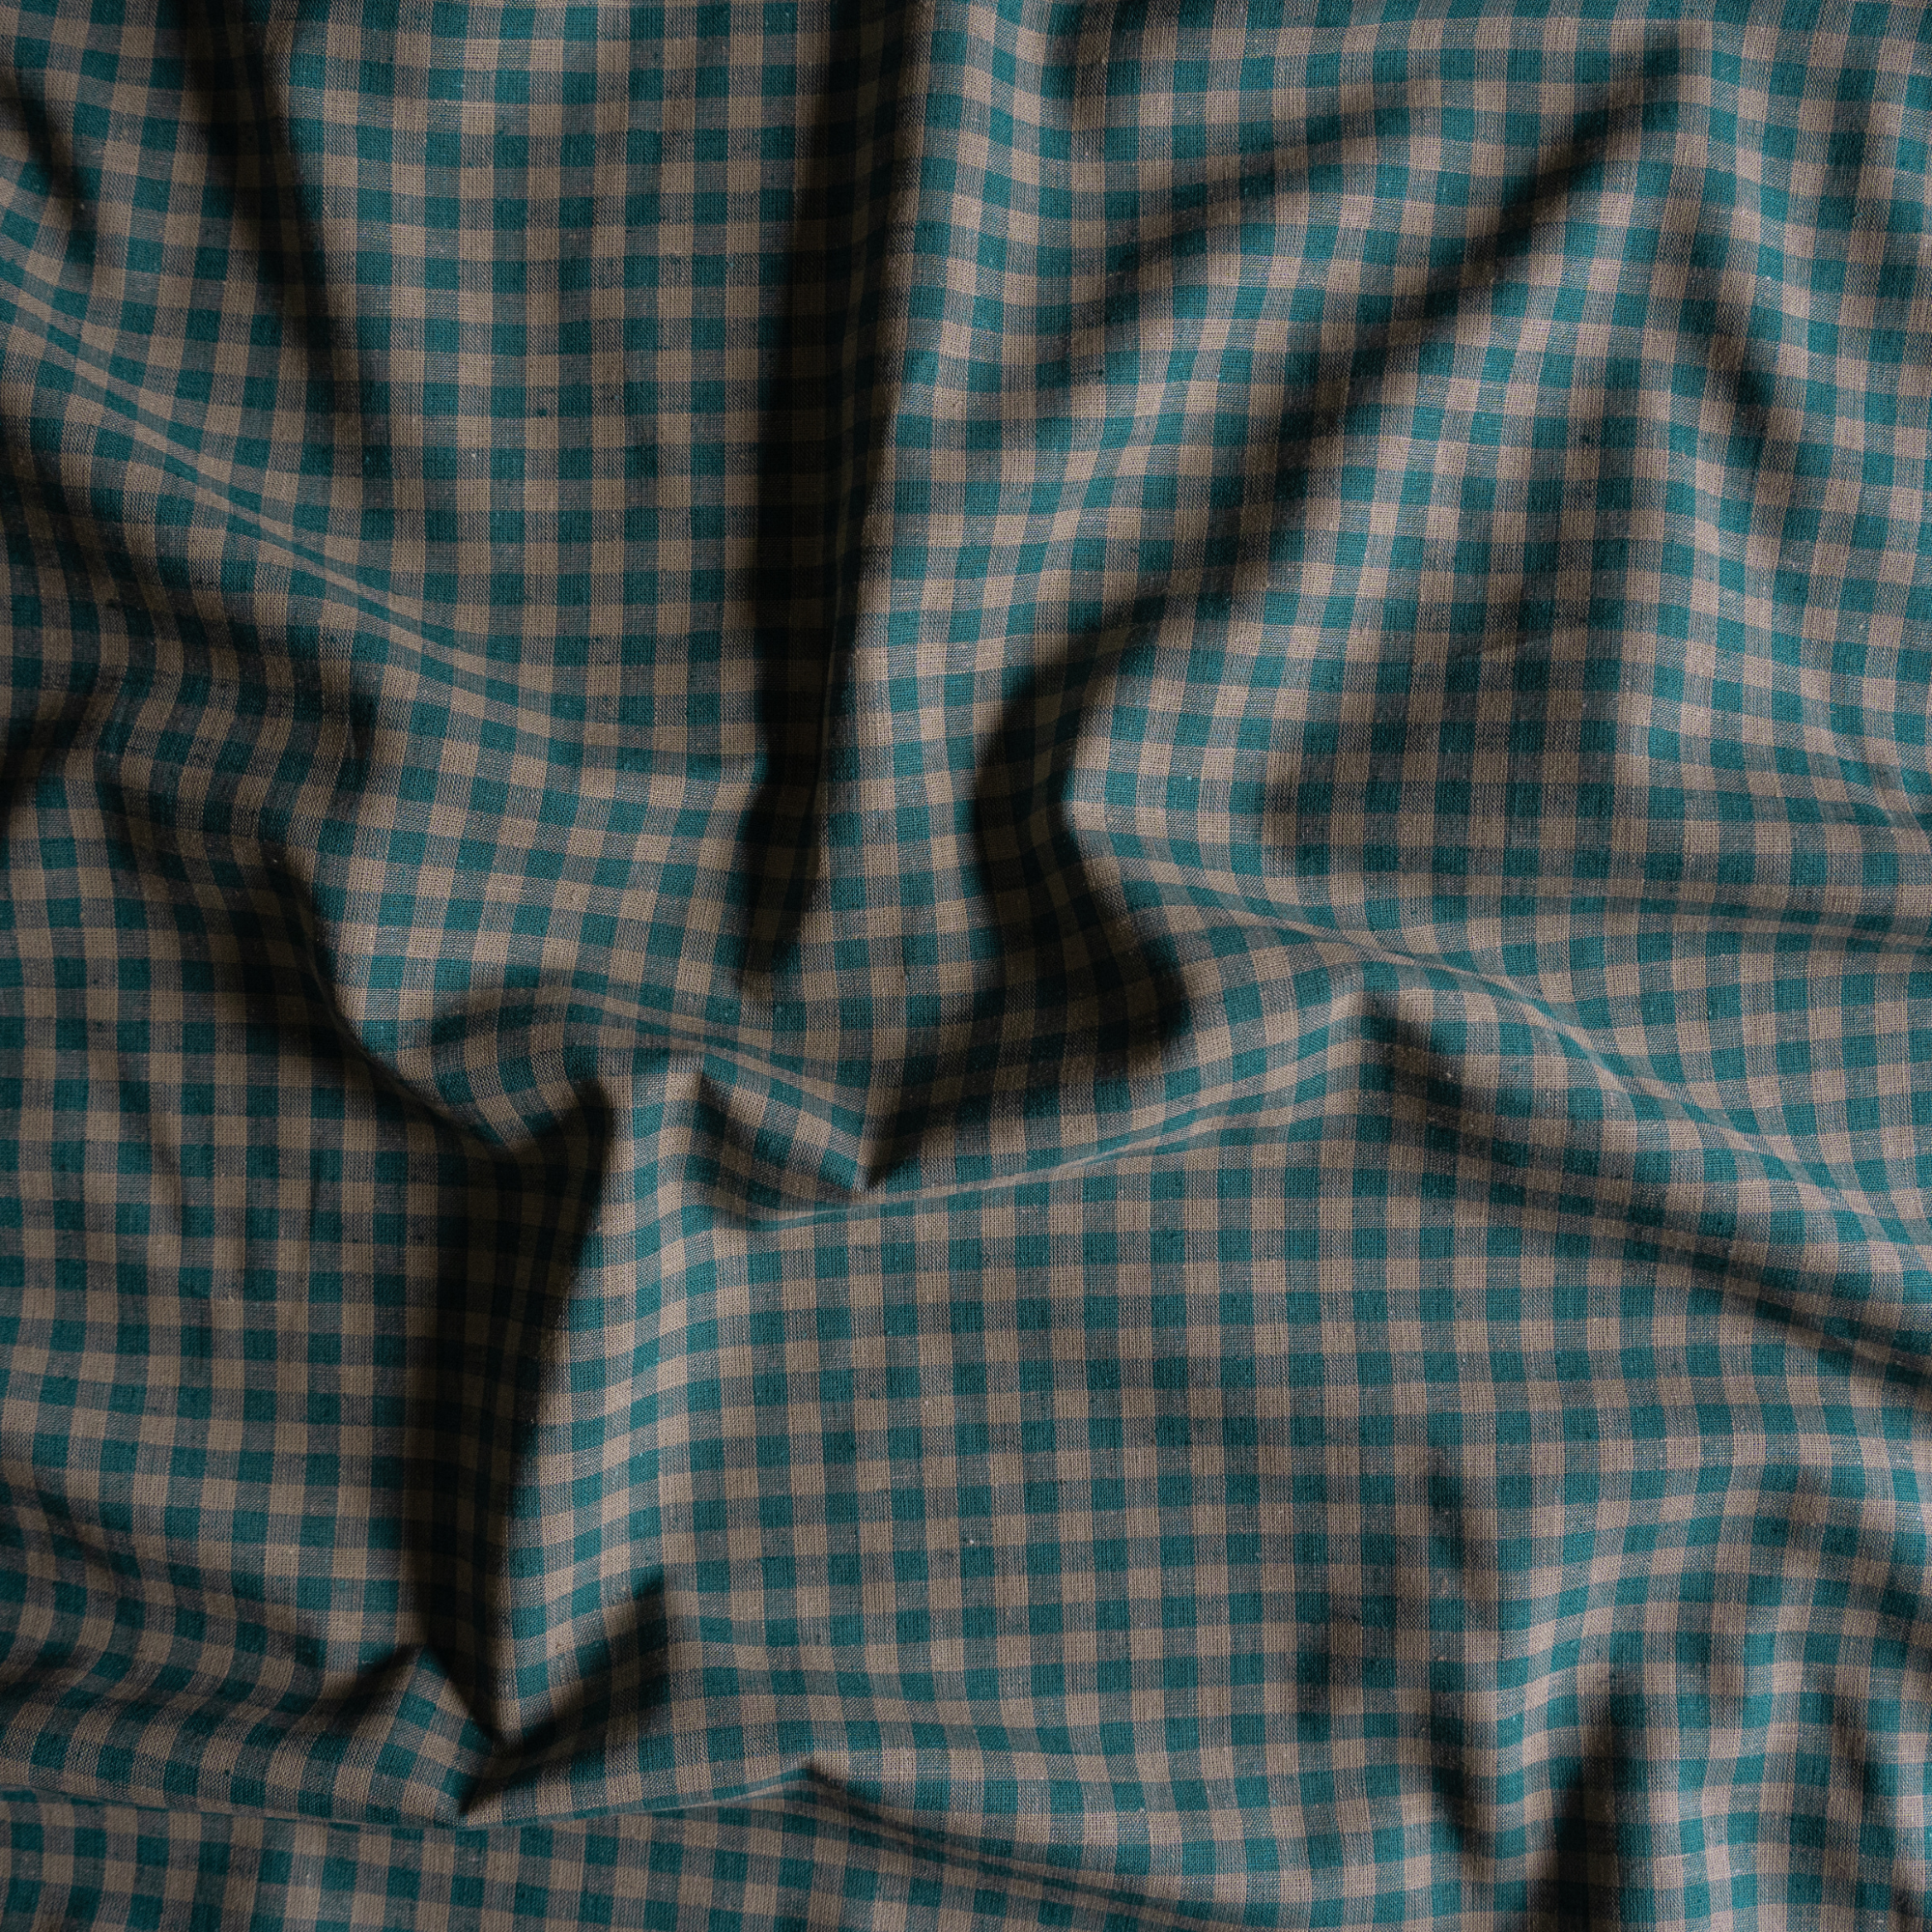 Maria Teal - Cotton/Linen Fabric